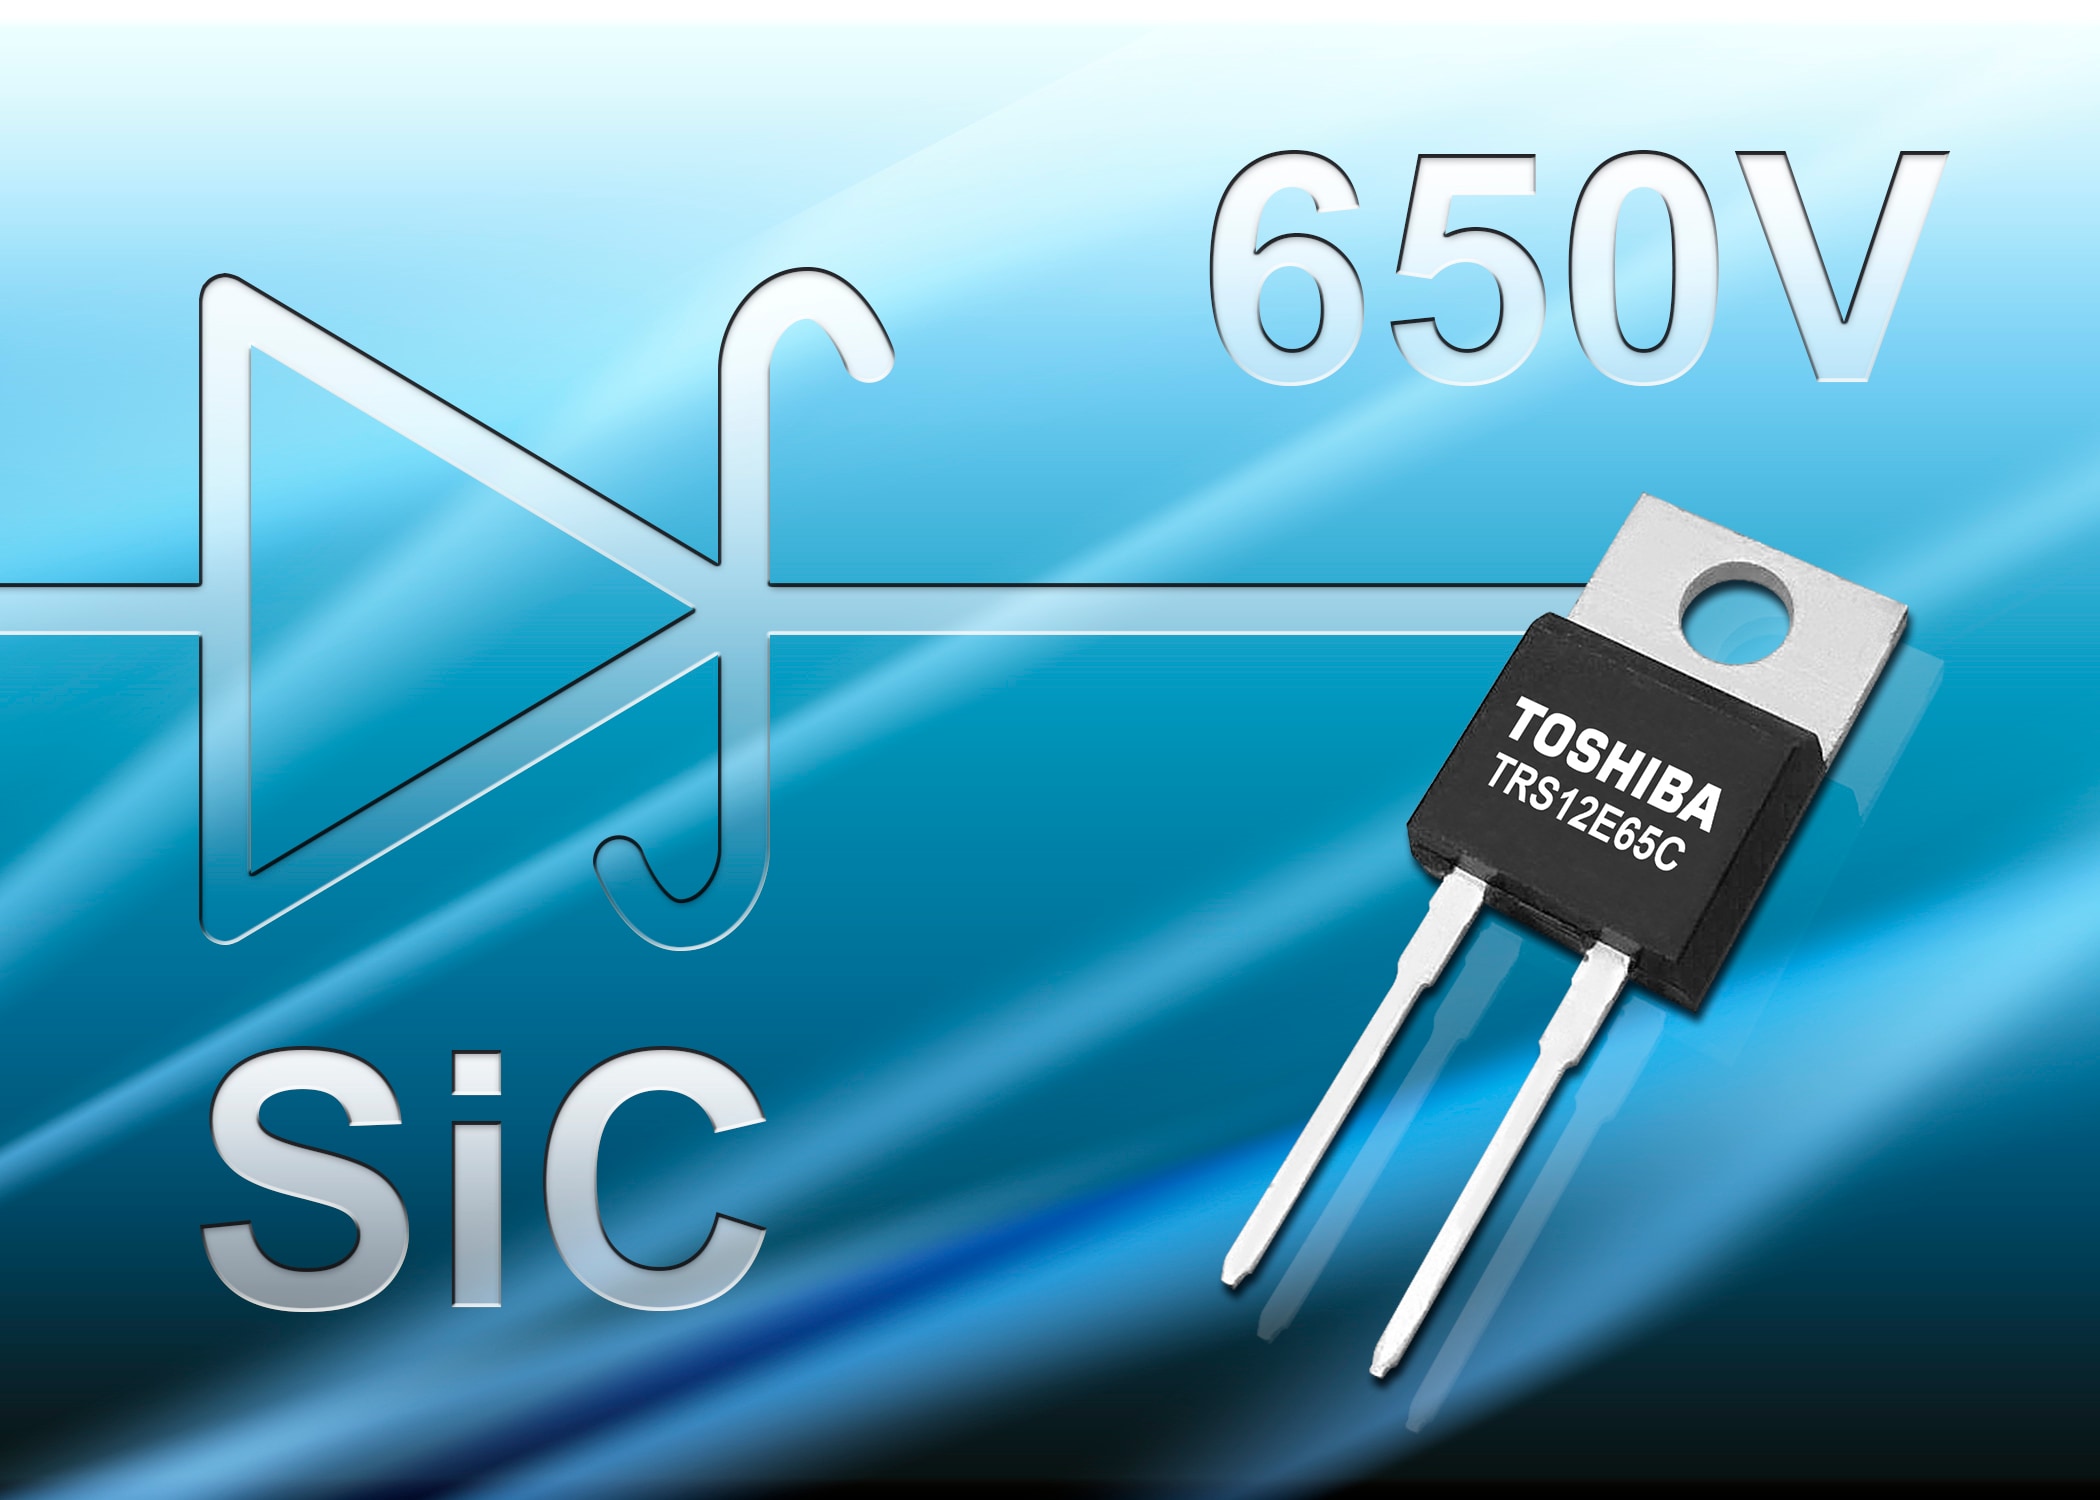 Toshiba SiC Power Devices